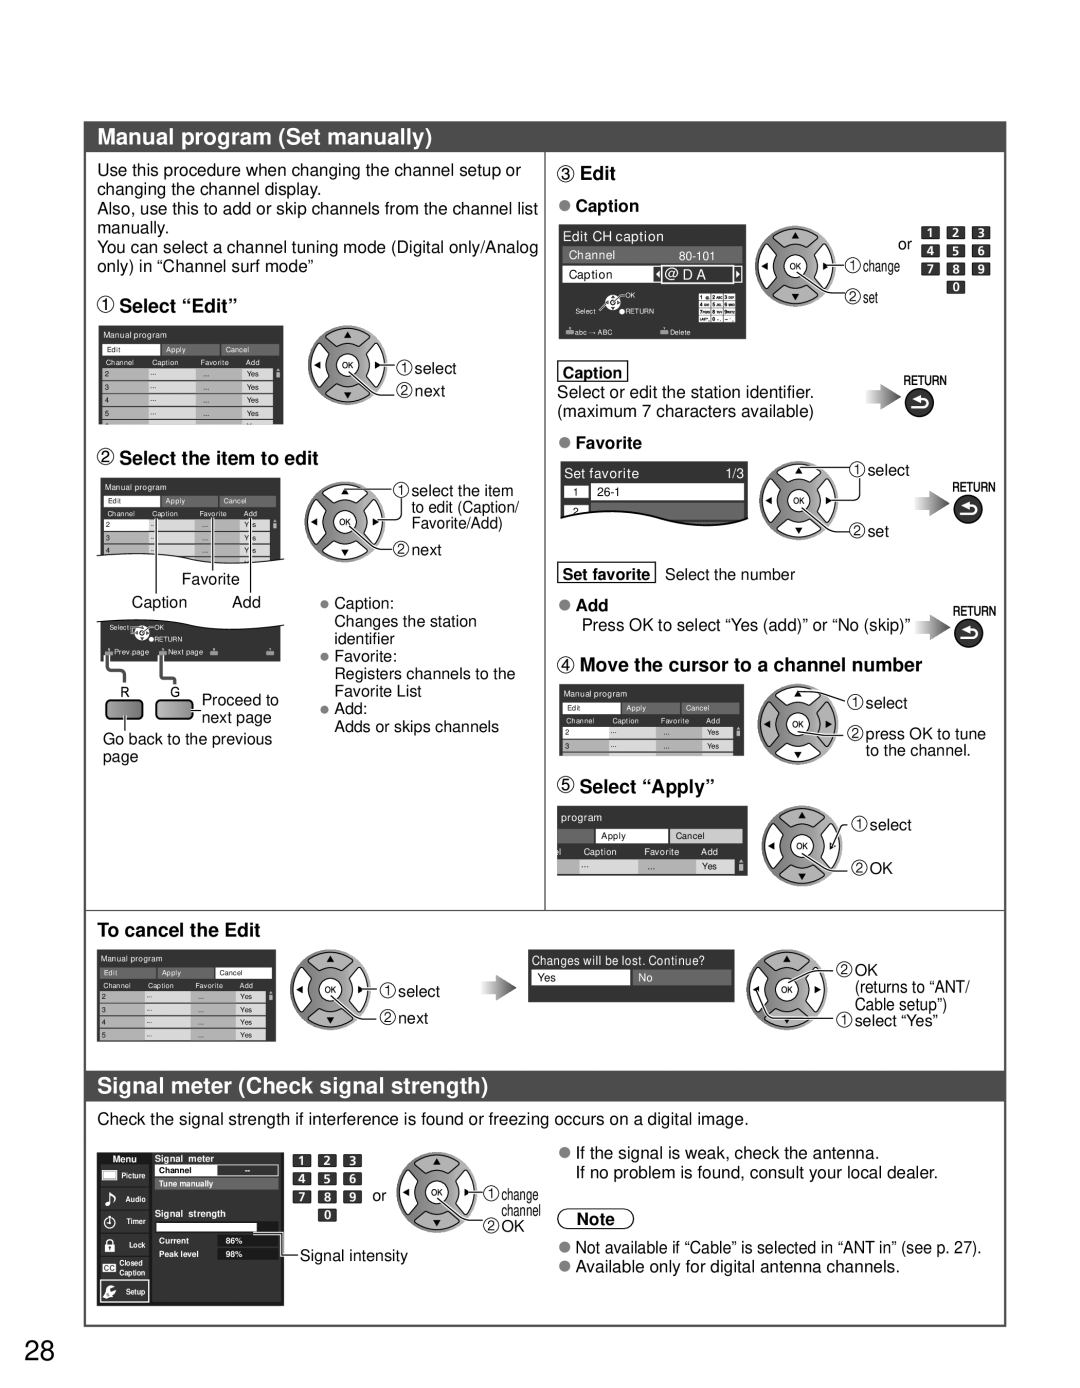 Panasonic TC-P50U50 Manual program Set manually, Signal meter Check signal strength, Select “Edit”, Select “Apply” 